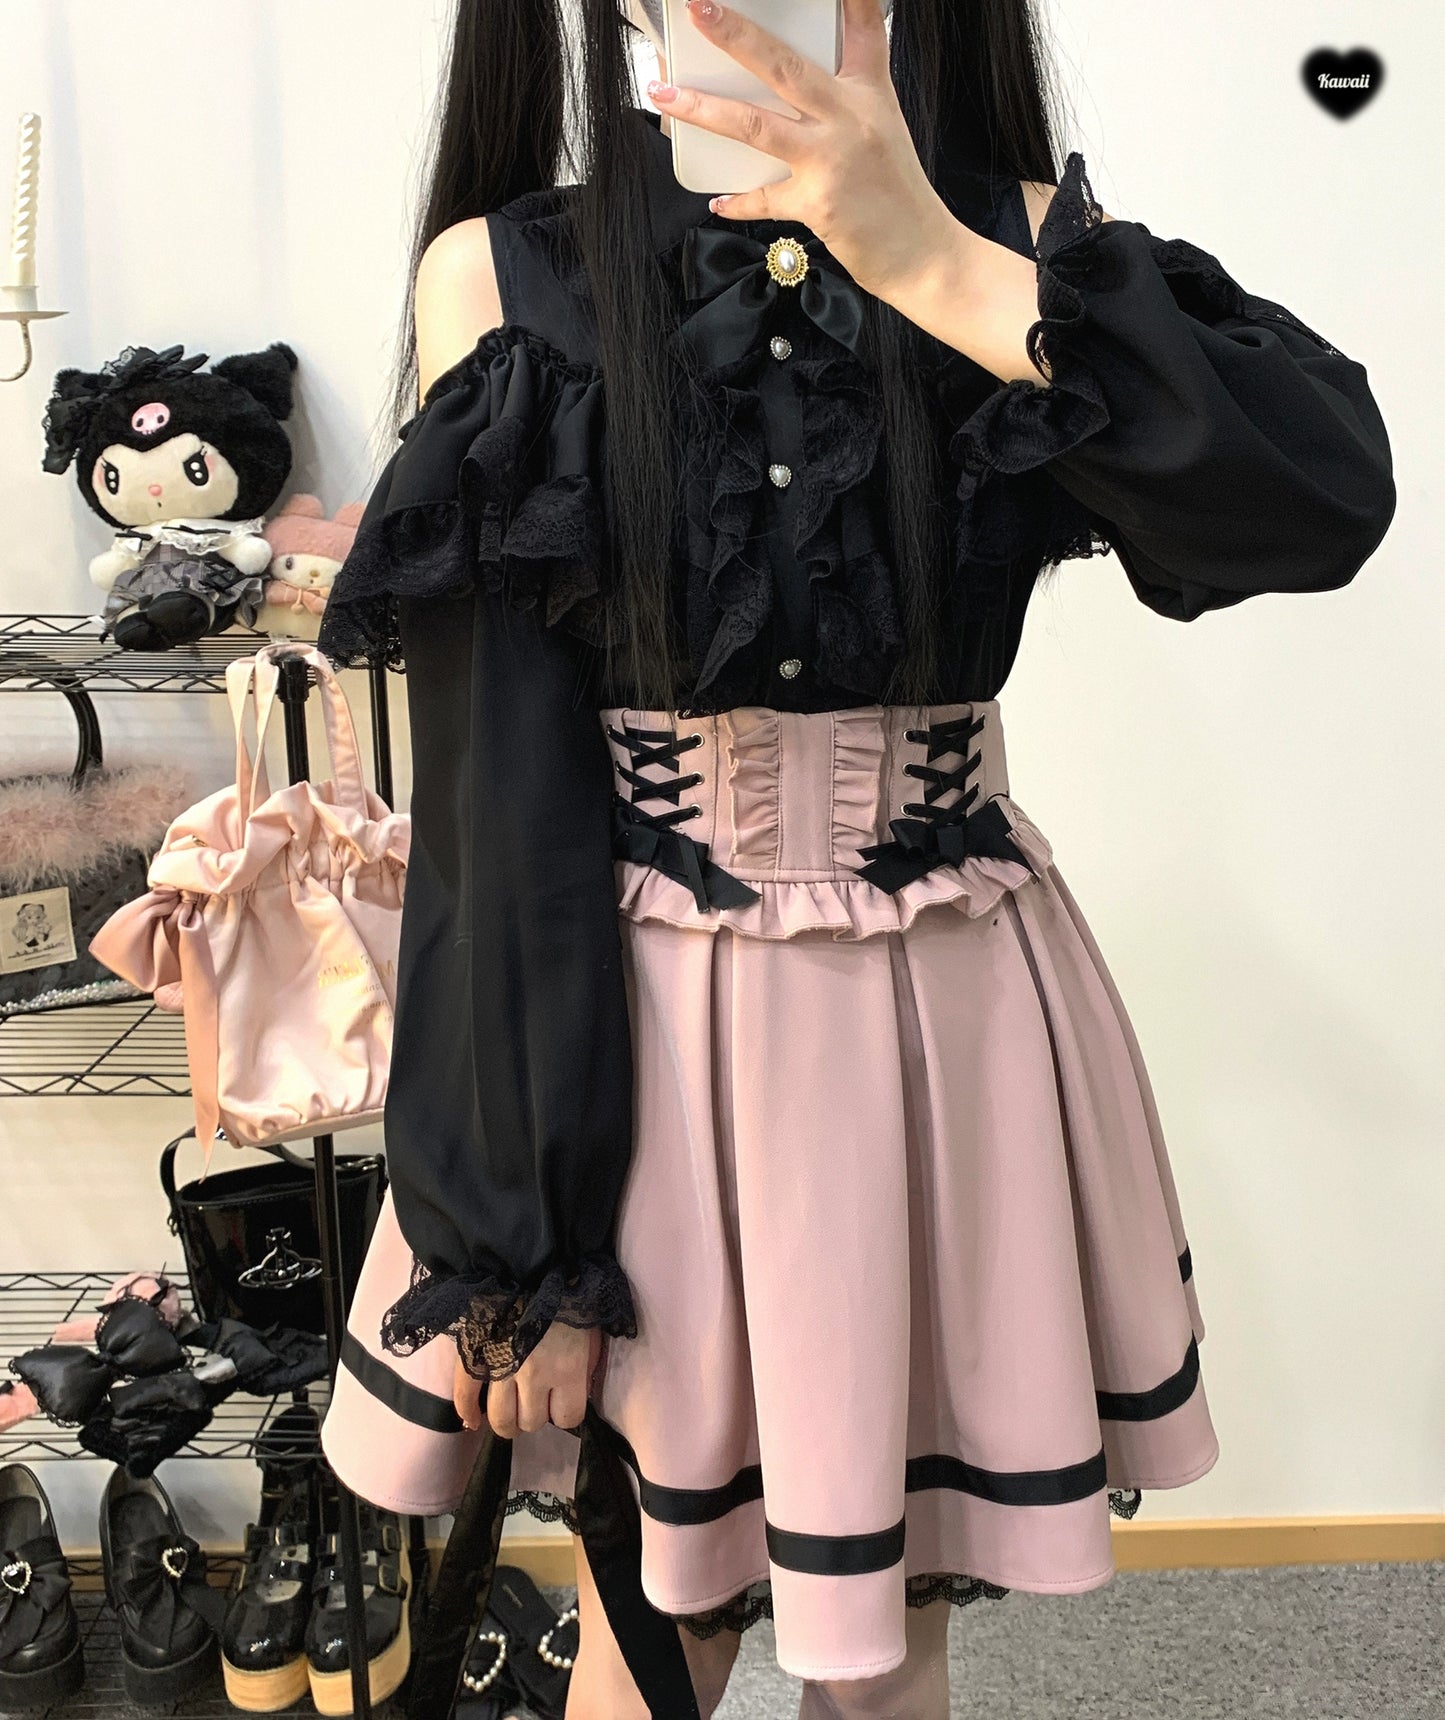 Jirai Kei Skirt High Waist Lace Up Skirt With Bow Tie 31860:396624